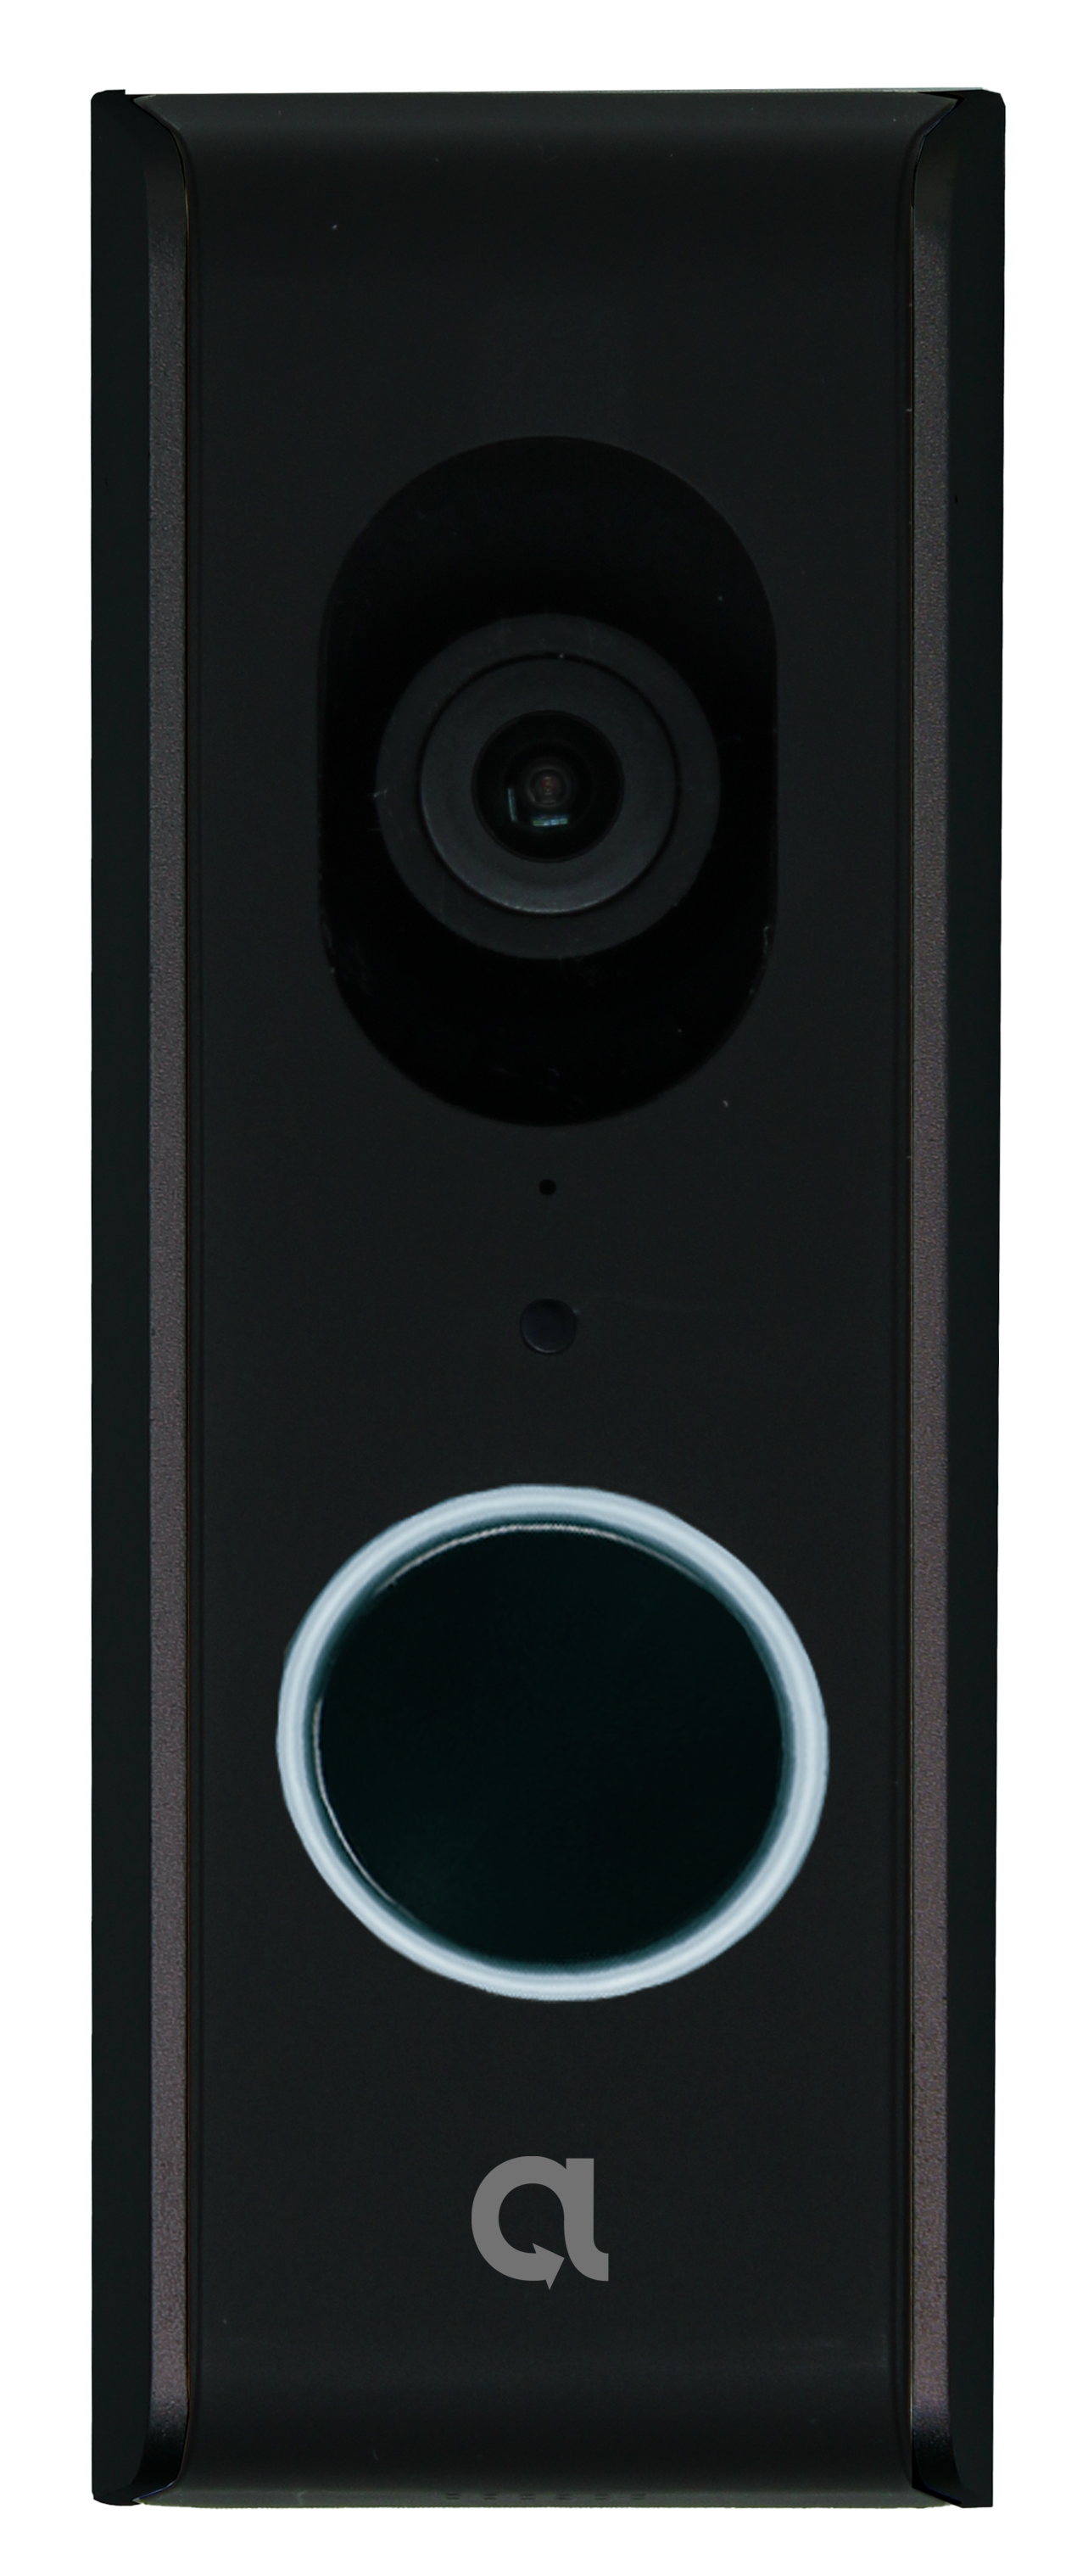 video Doorbell Cameras